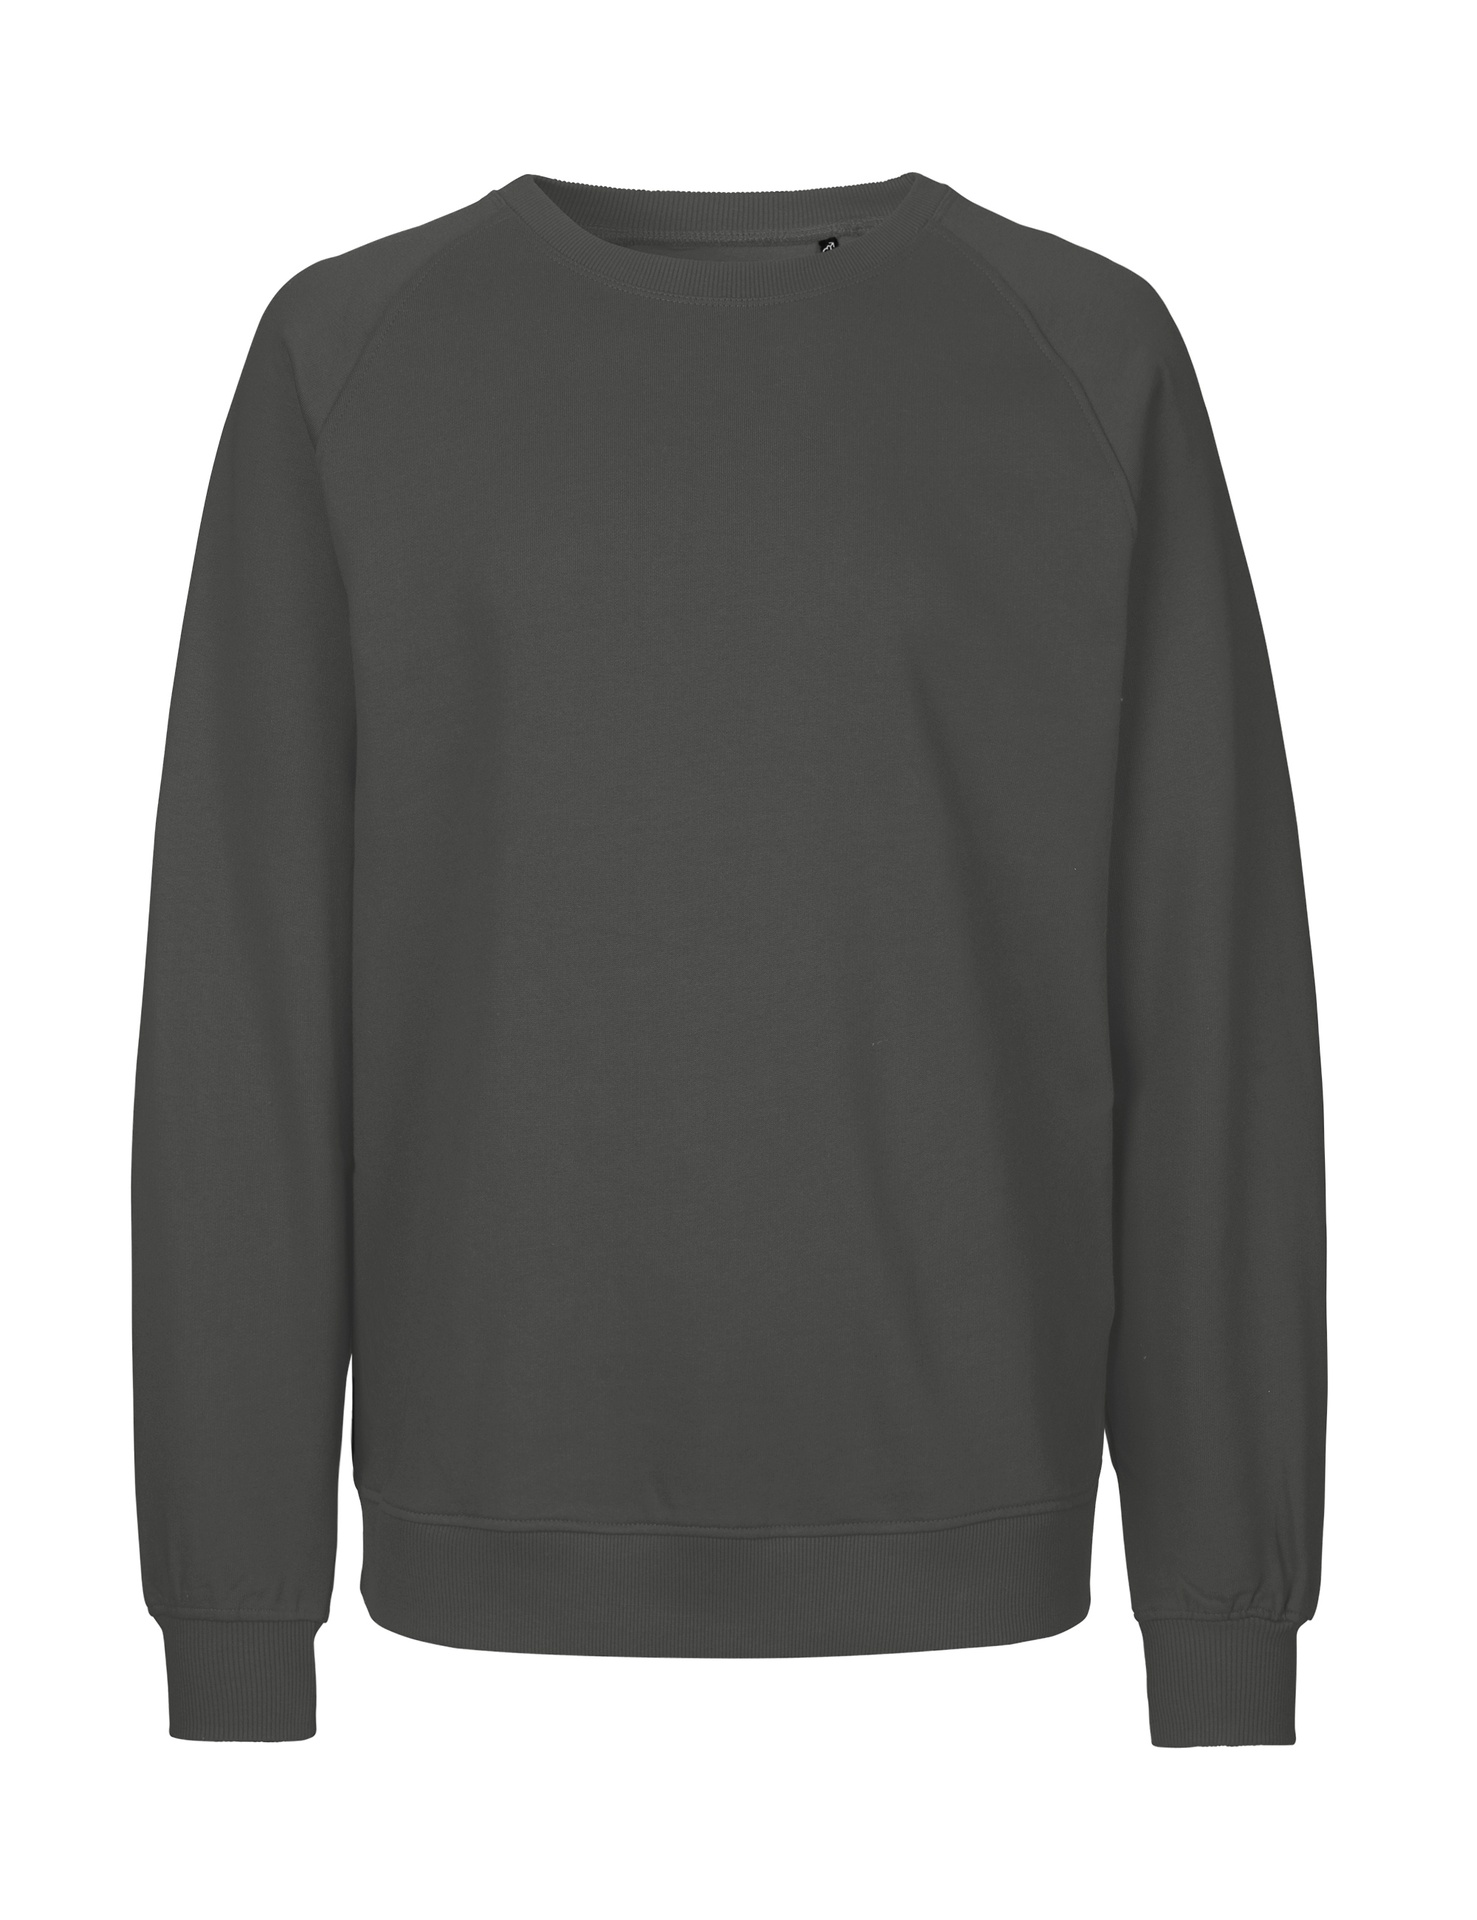 [PR/02690] Unisex Sweatshirt (Charcoal 06, M)